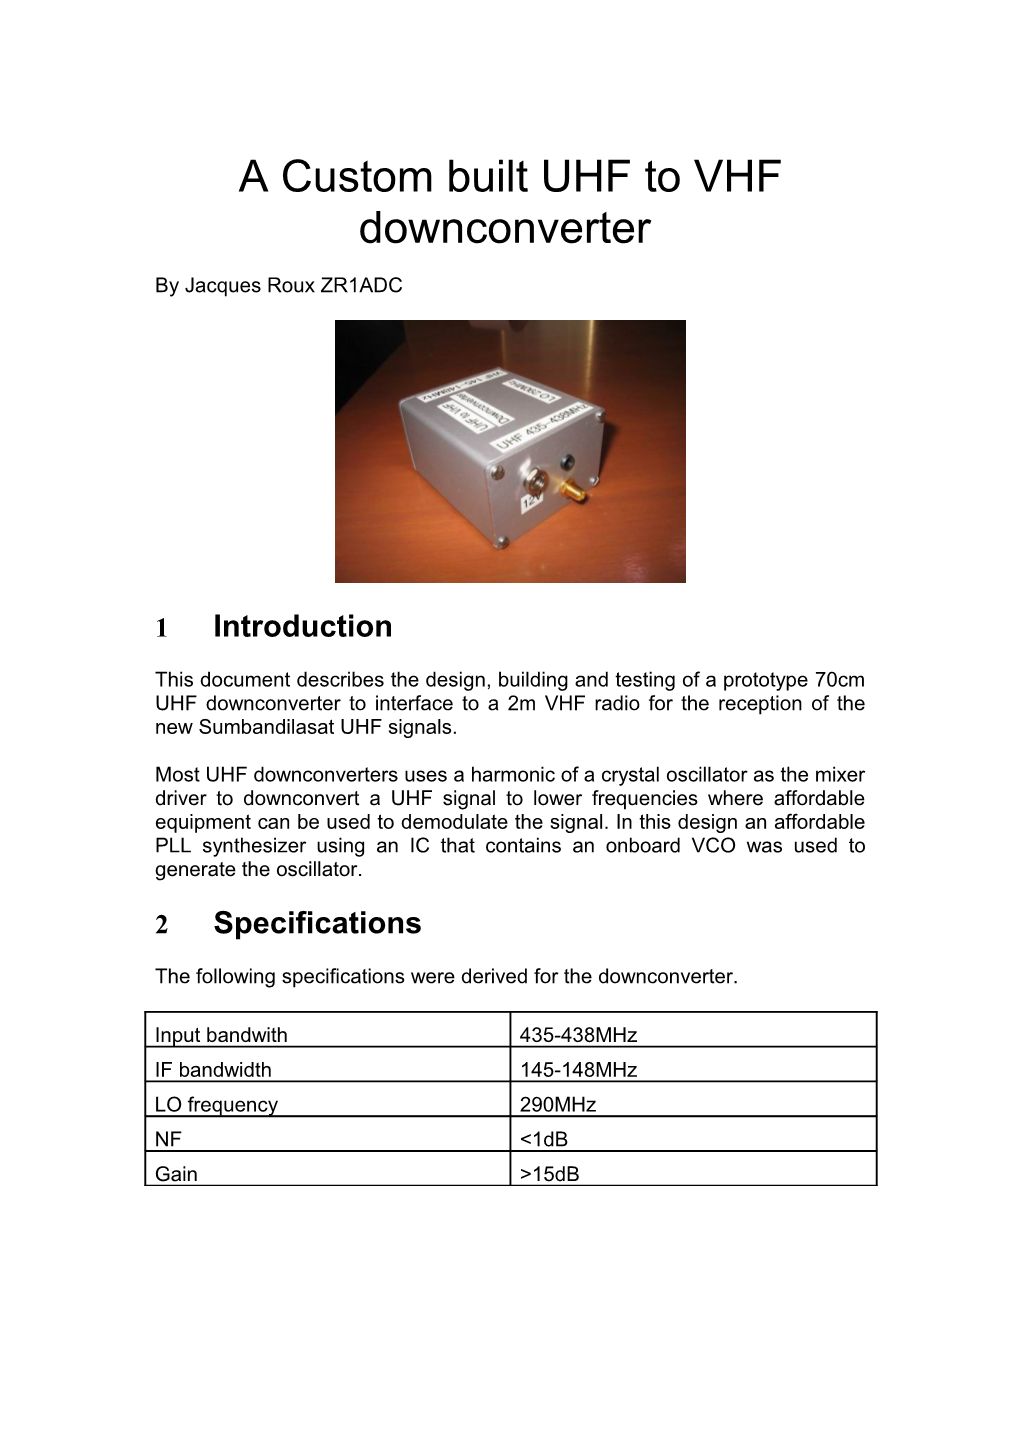 A Custom Built UHF to VHF Downconverter